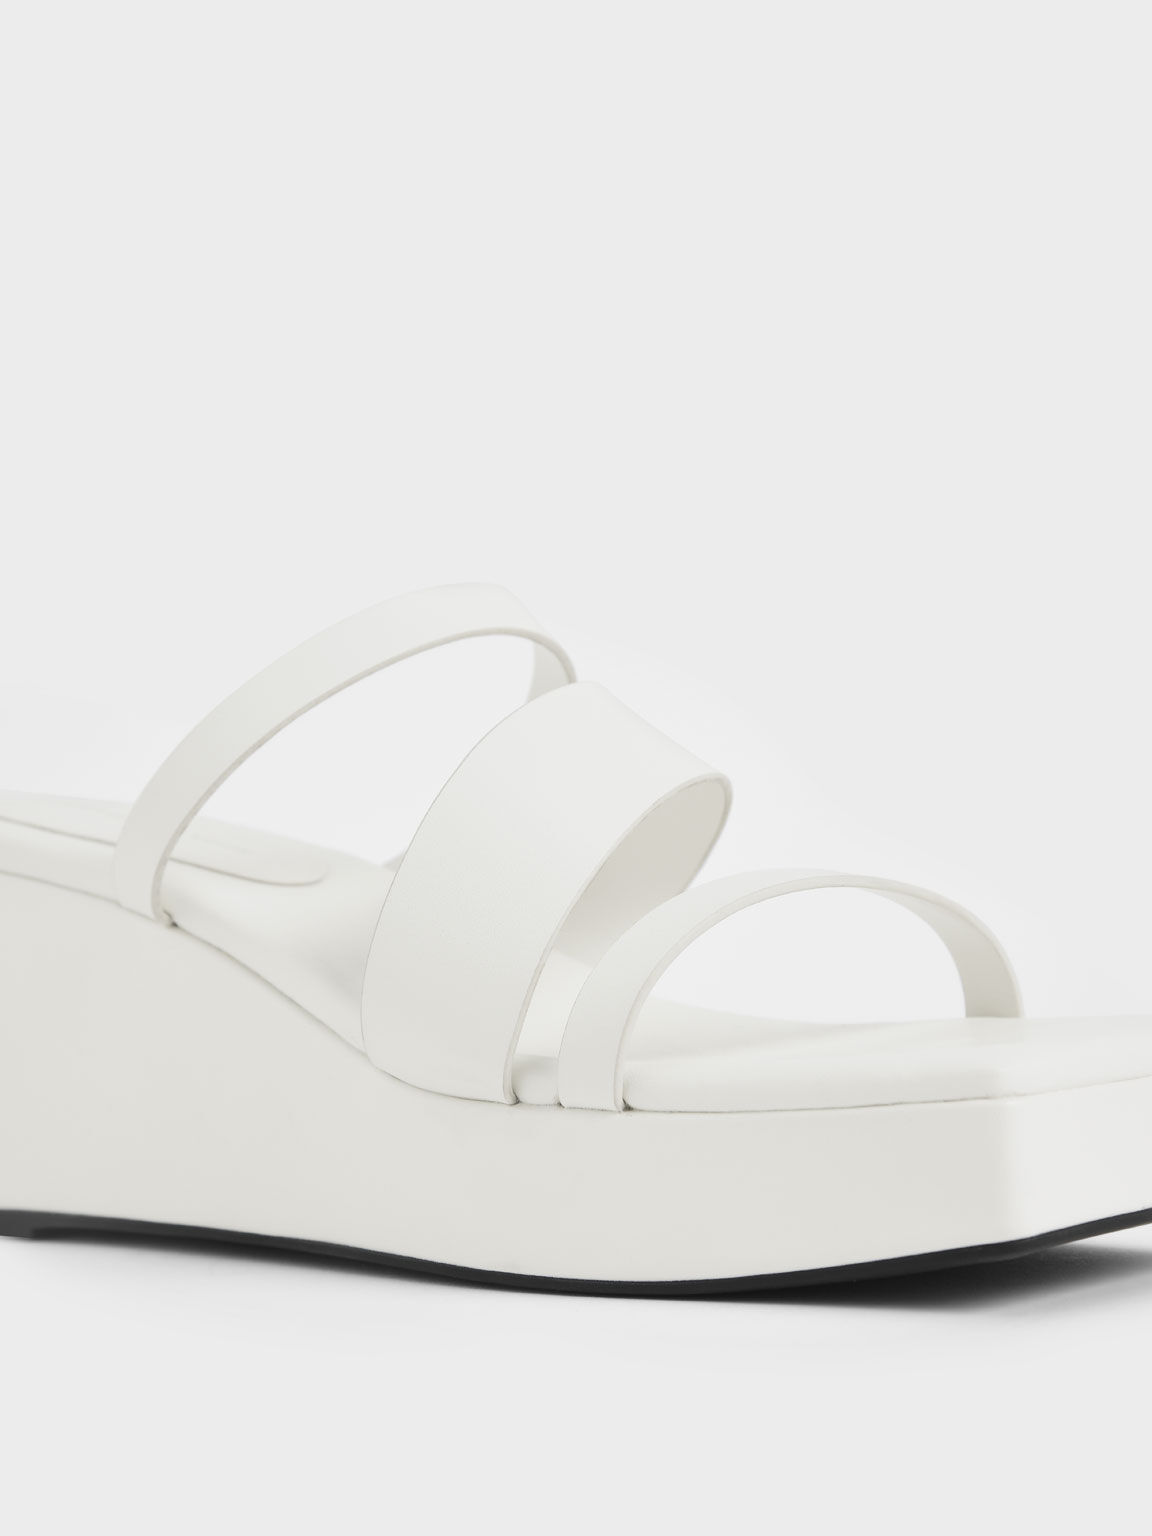 Sepatu Wedges Platform Asimetris, White, hi-res